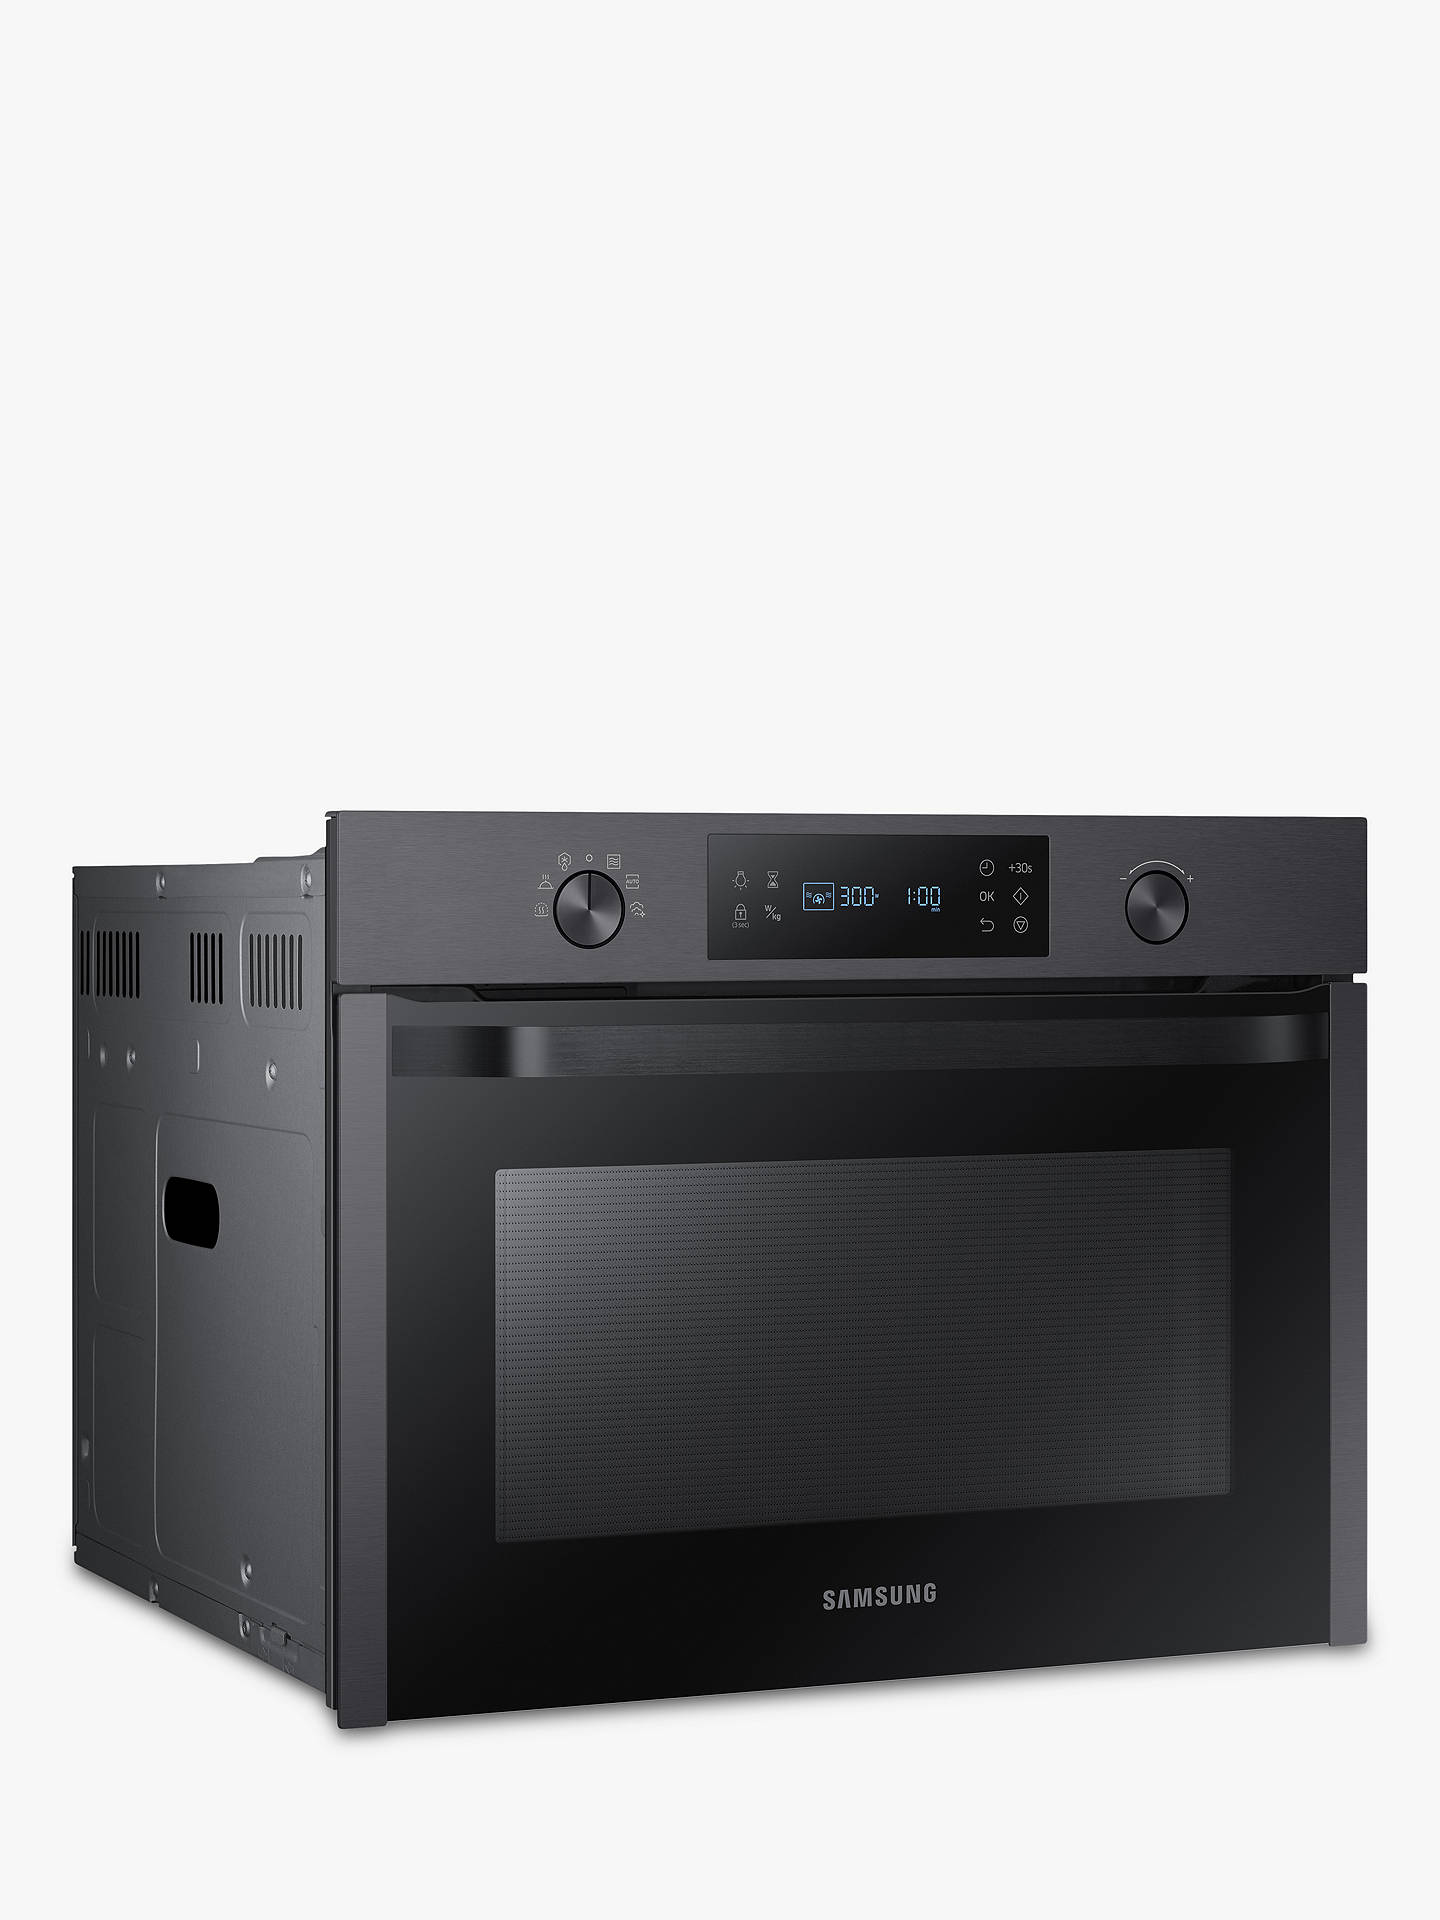 Samsung NQ50K3130BM/EU Built-In Microwave, Black/Stainless Steel at Black Stainless Steel Samsung Microwave